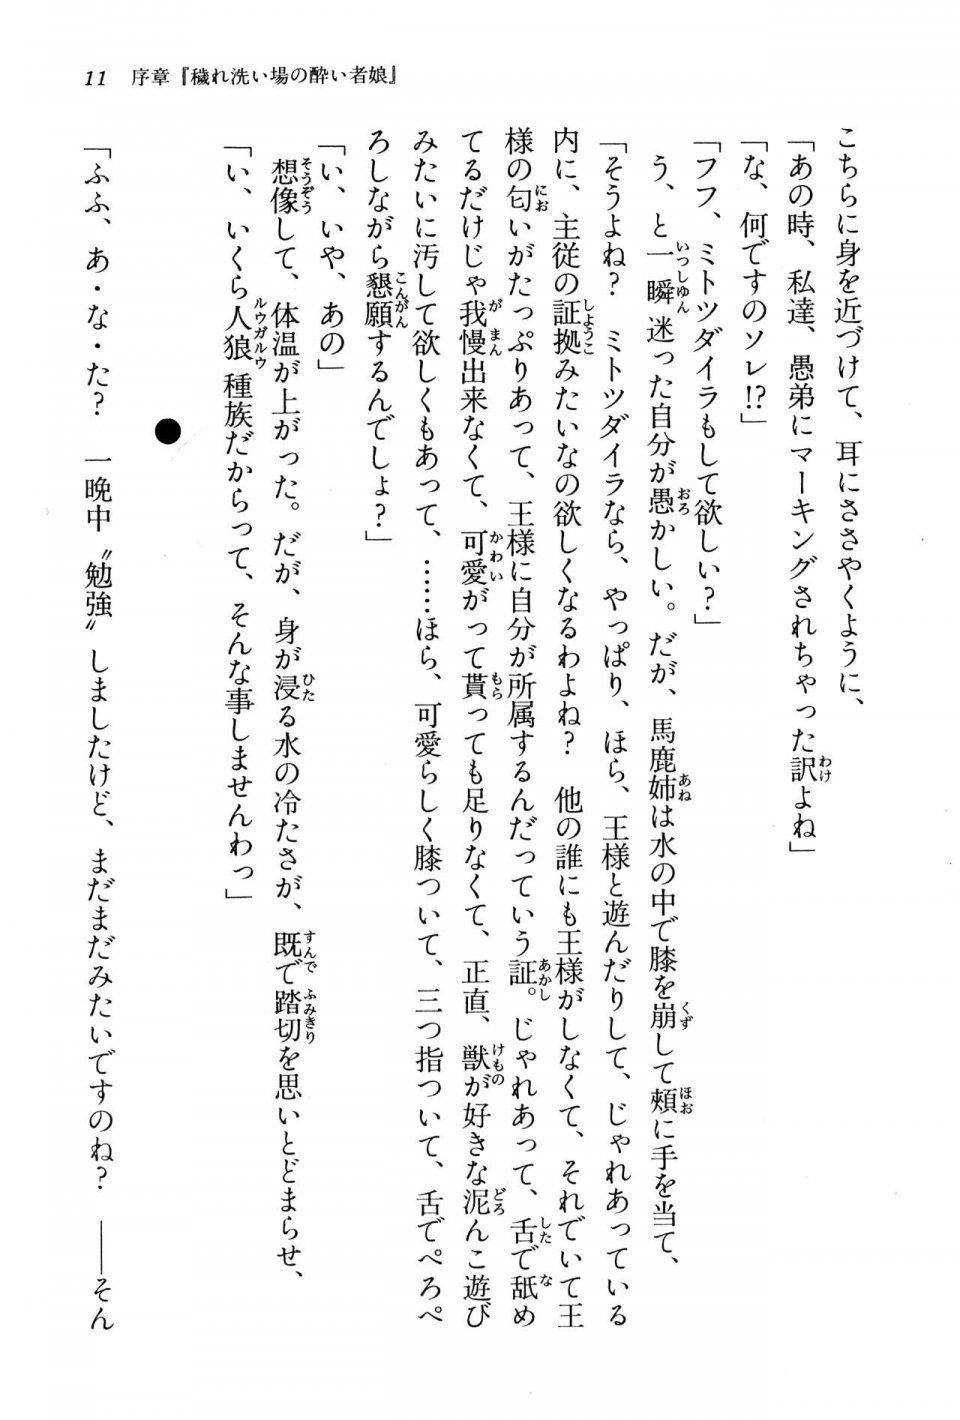 Kyoukai Senjou no Horizon BD Special Mininovel Vol 5(3A) - Photo #15